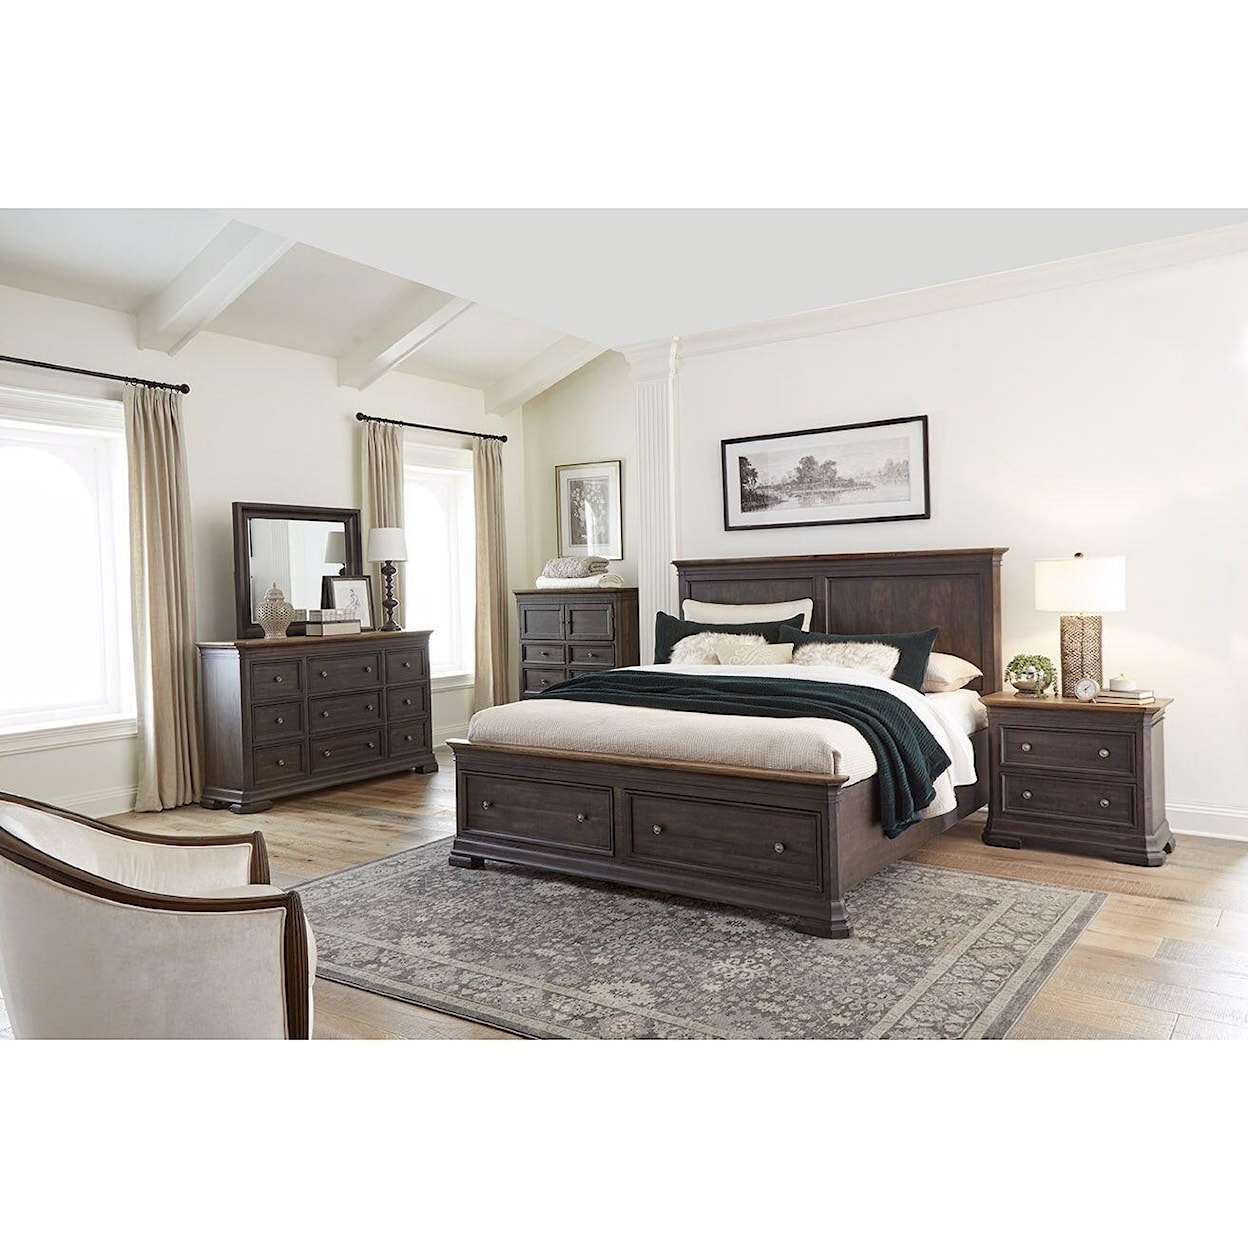 Napa Furniture Design The Grand Louie California King Low Profile Bed